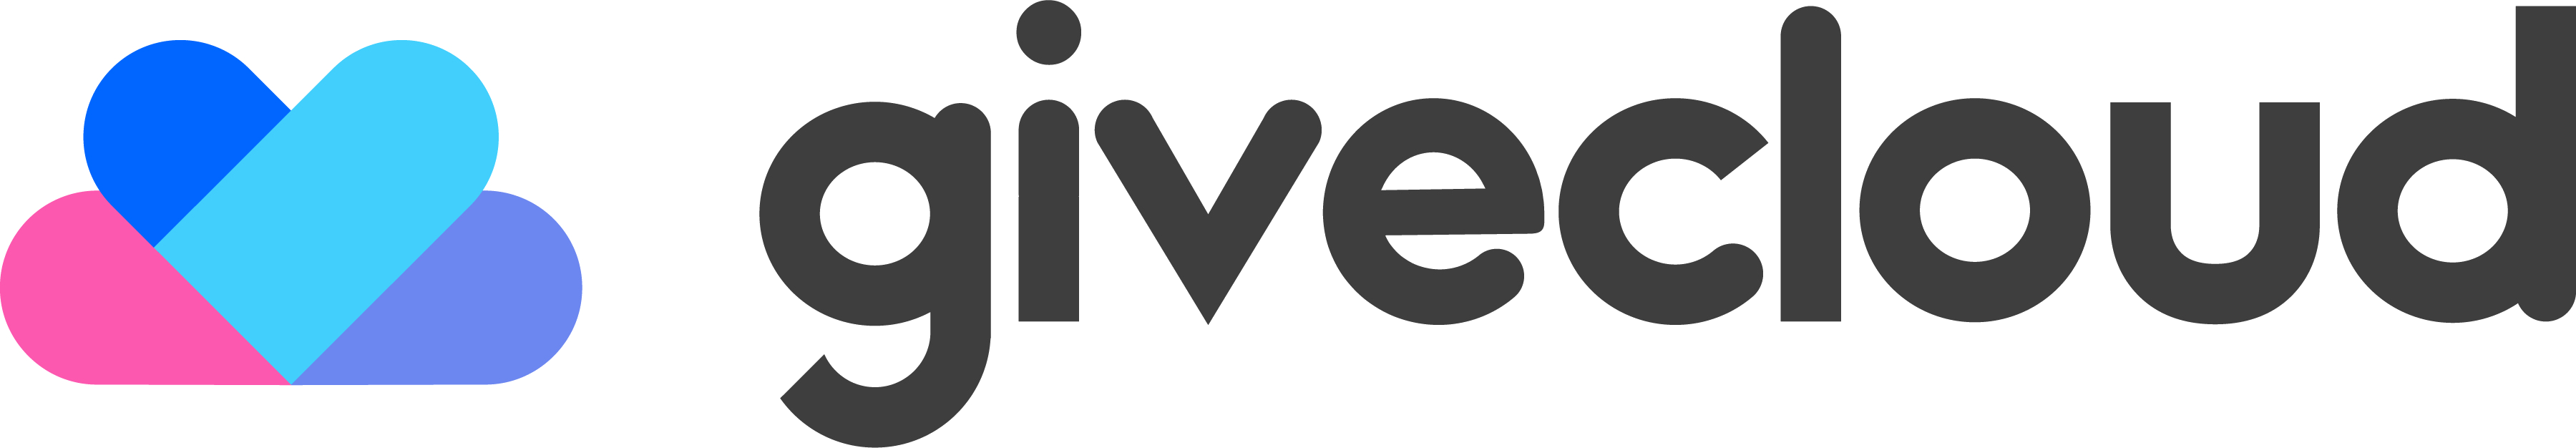 Givecloud partner logo